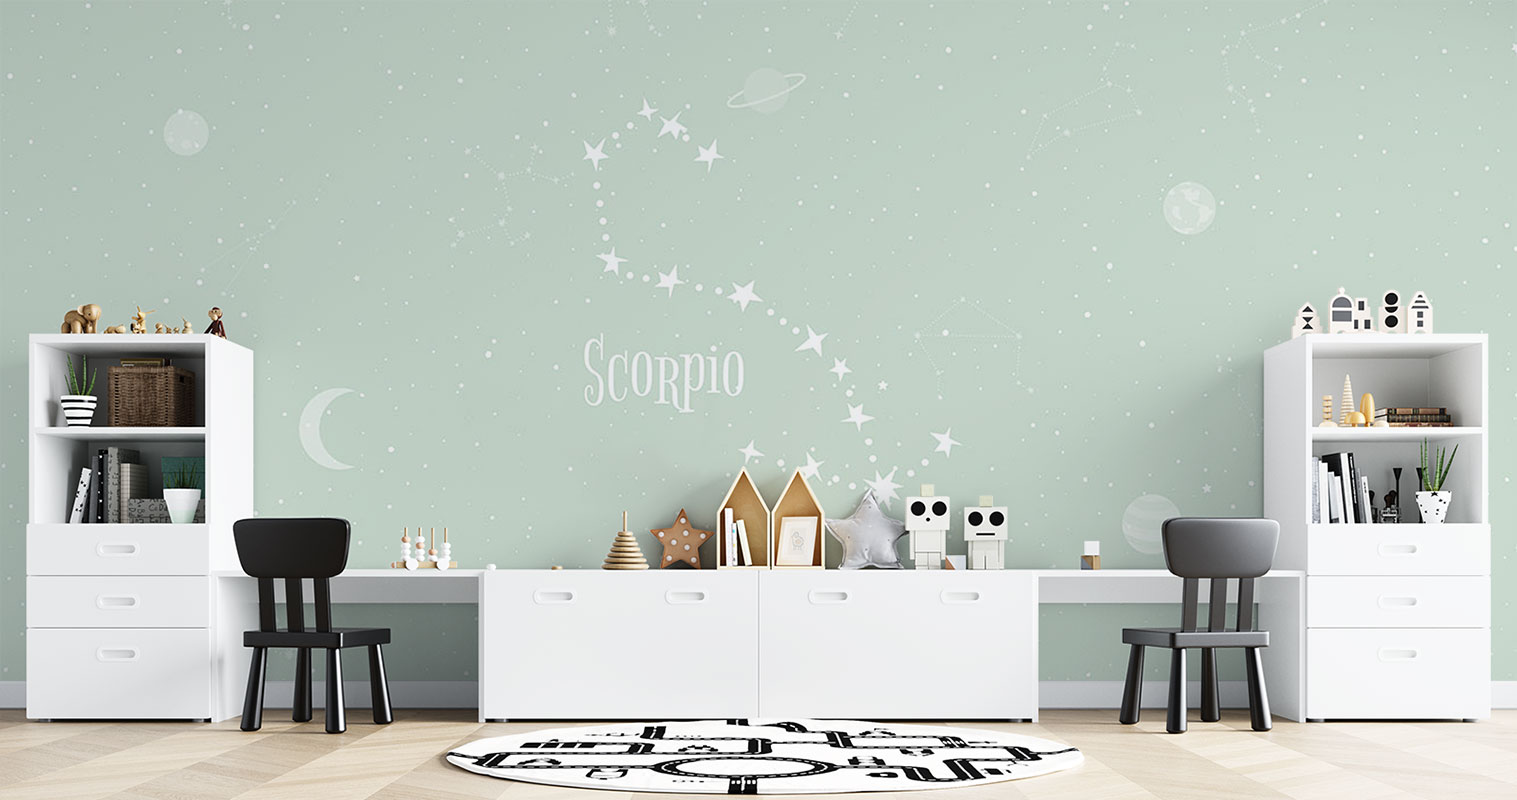 Horoscope Scorpio – Sage Green